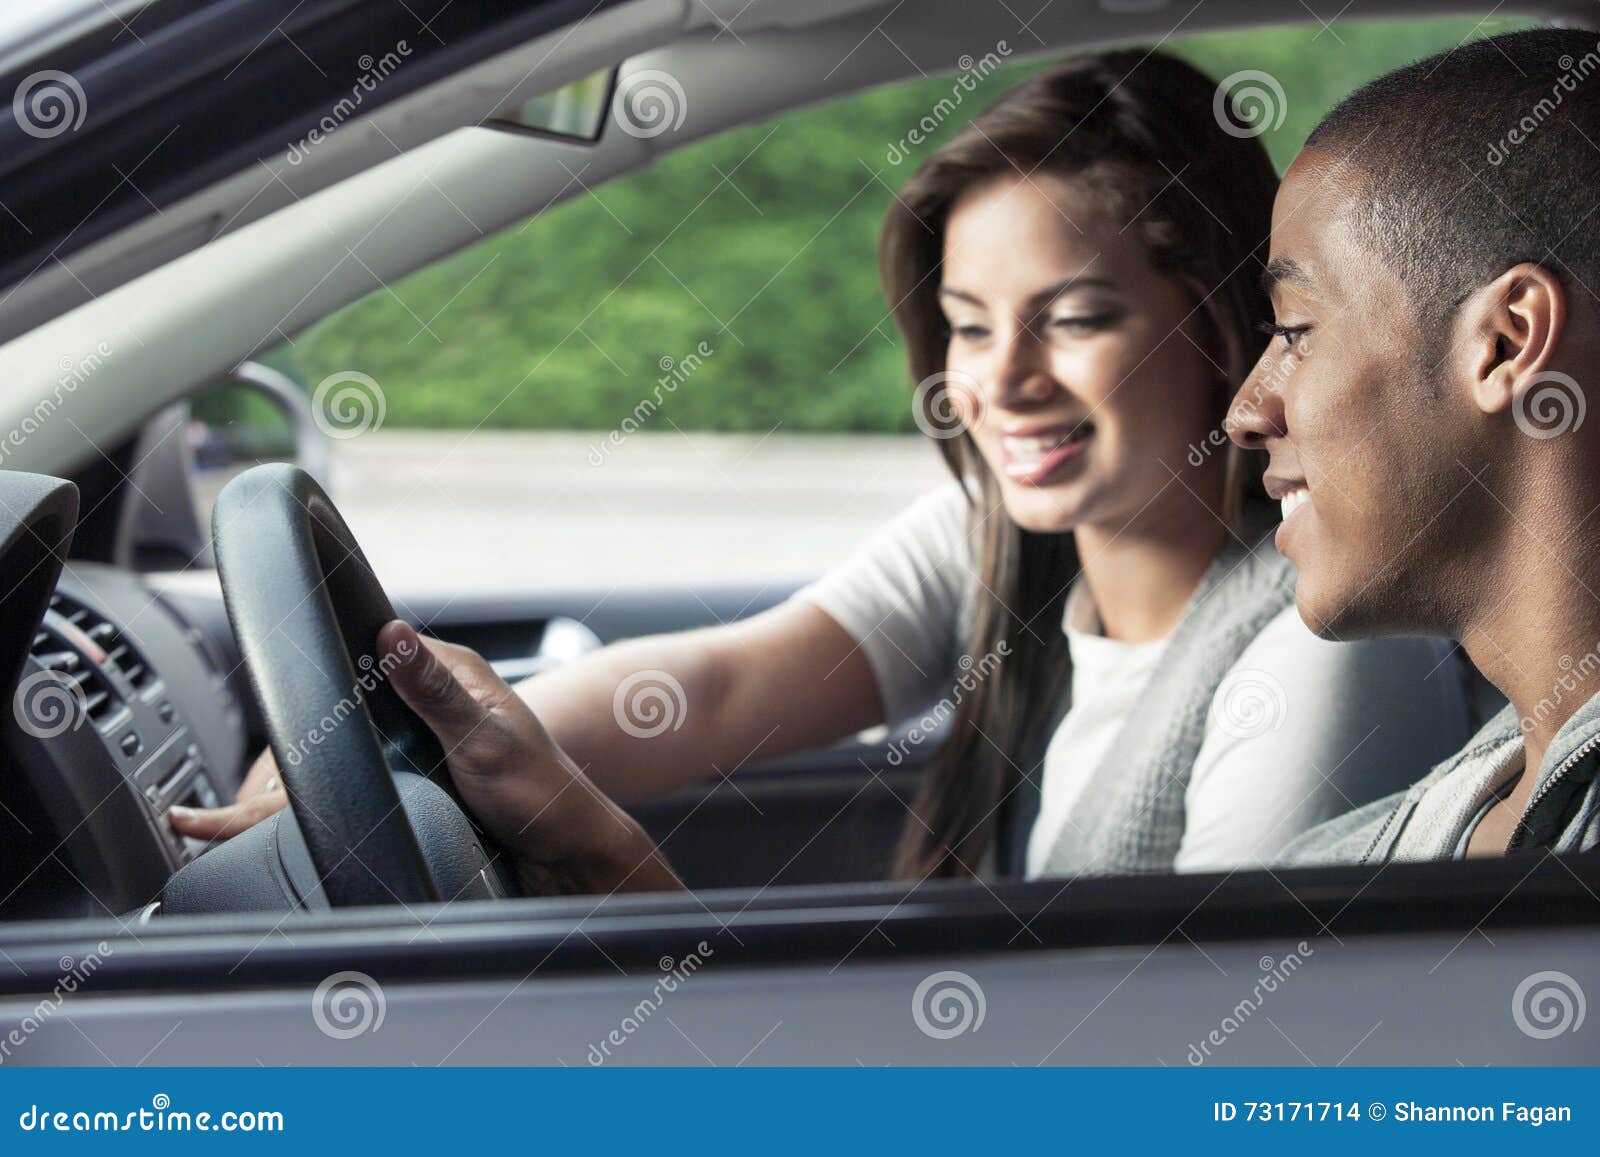 teens driving car